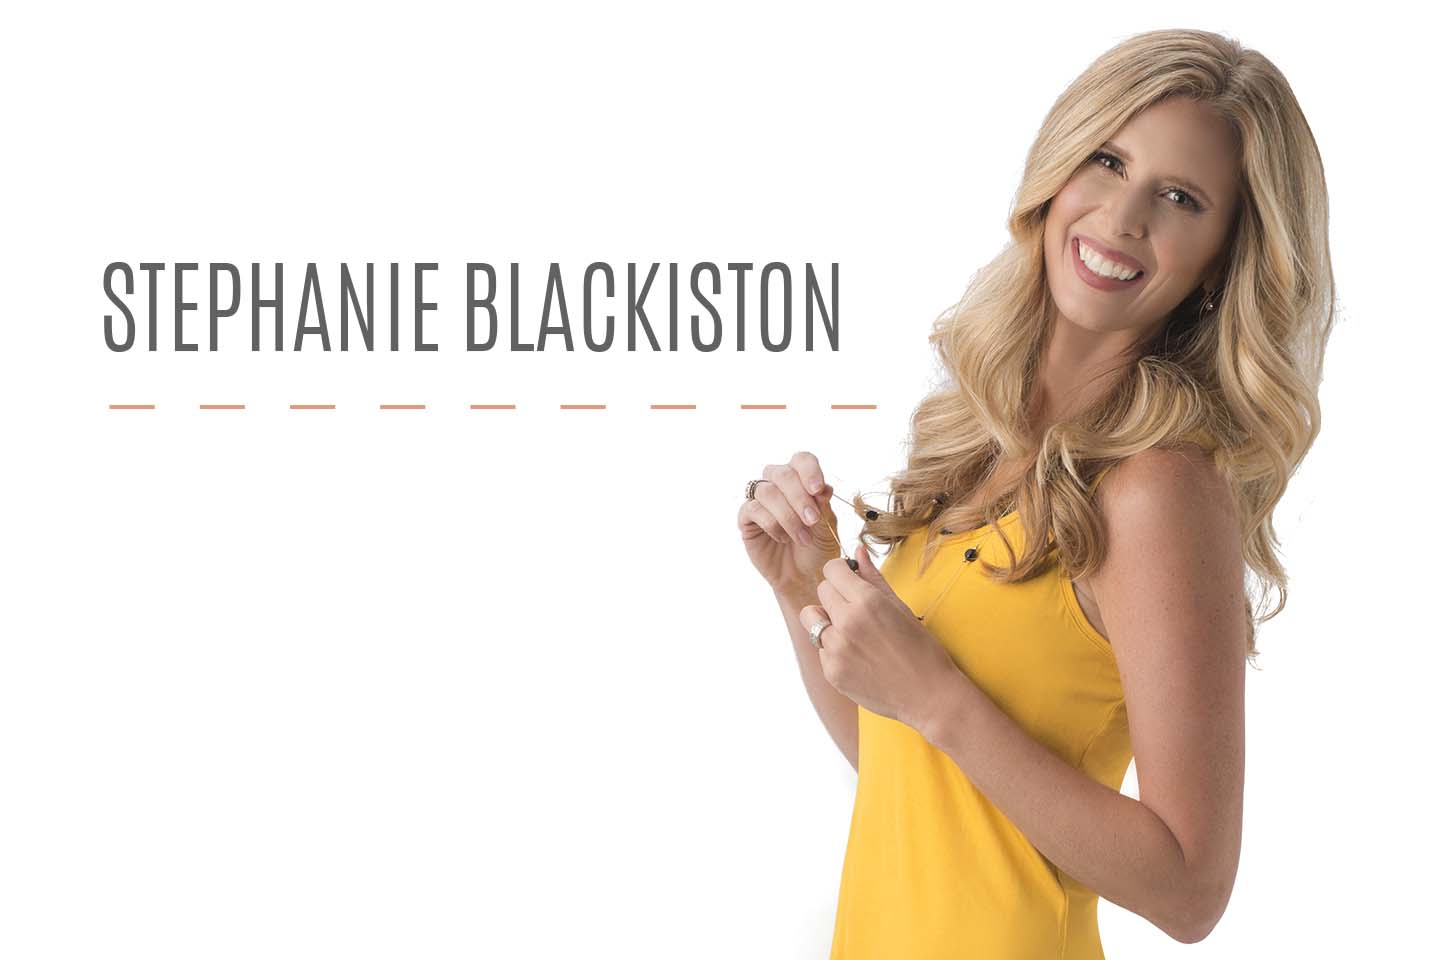 Stephanie Blackston chattanooga healthscope cover model